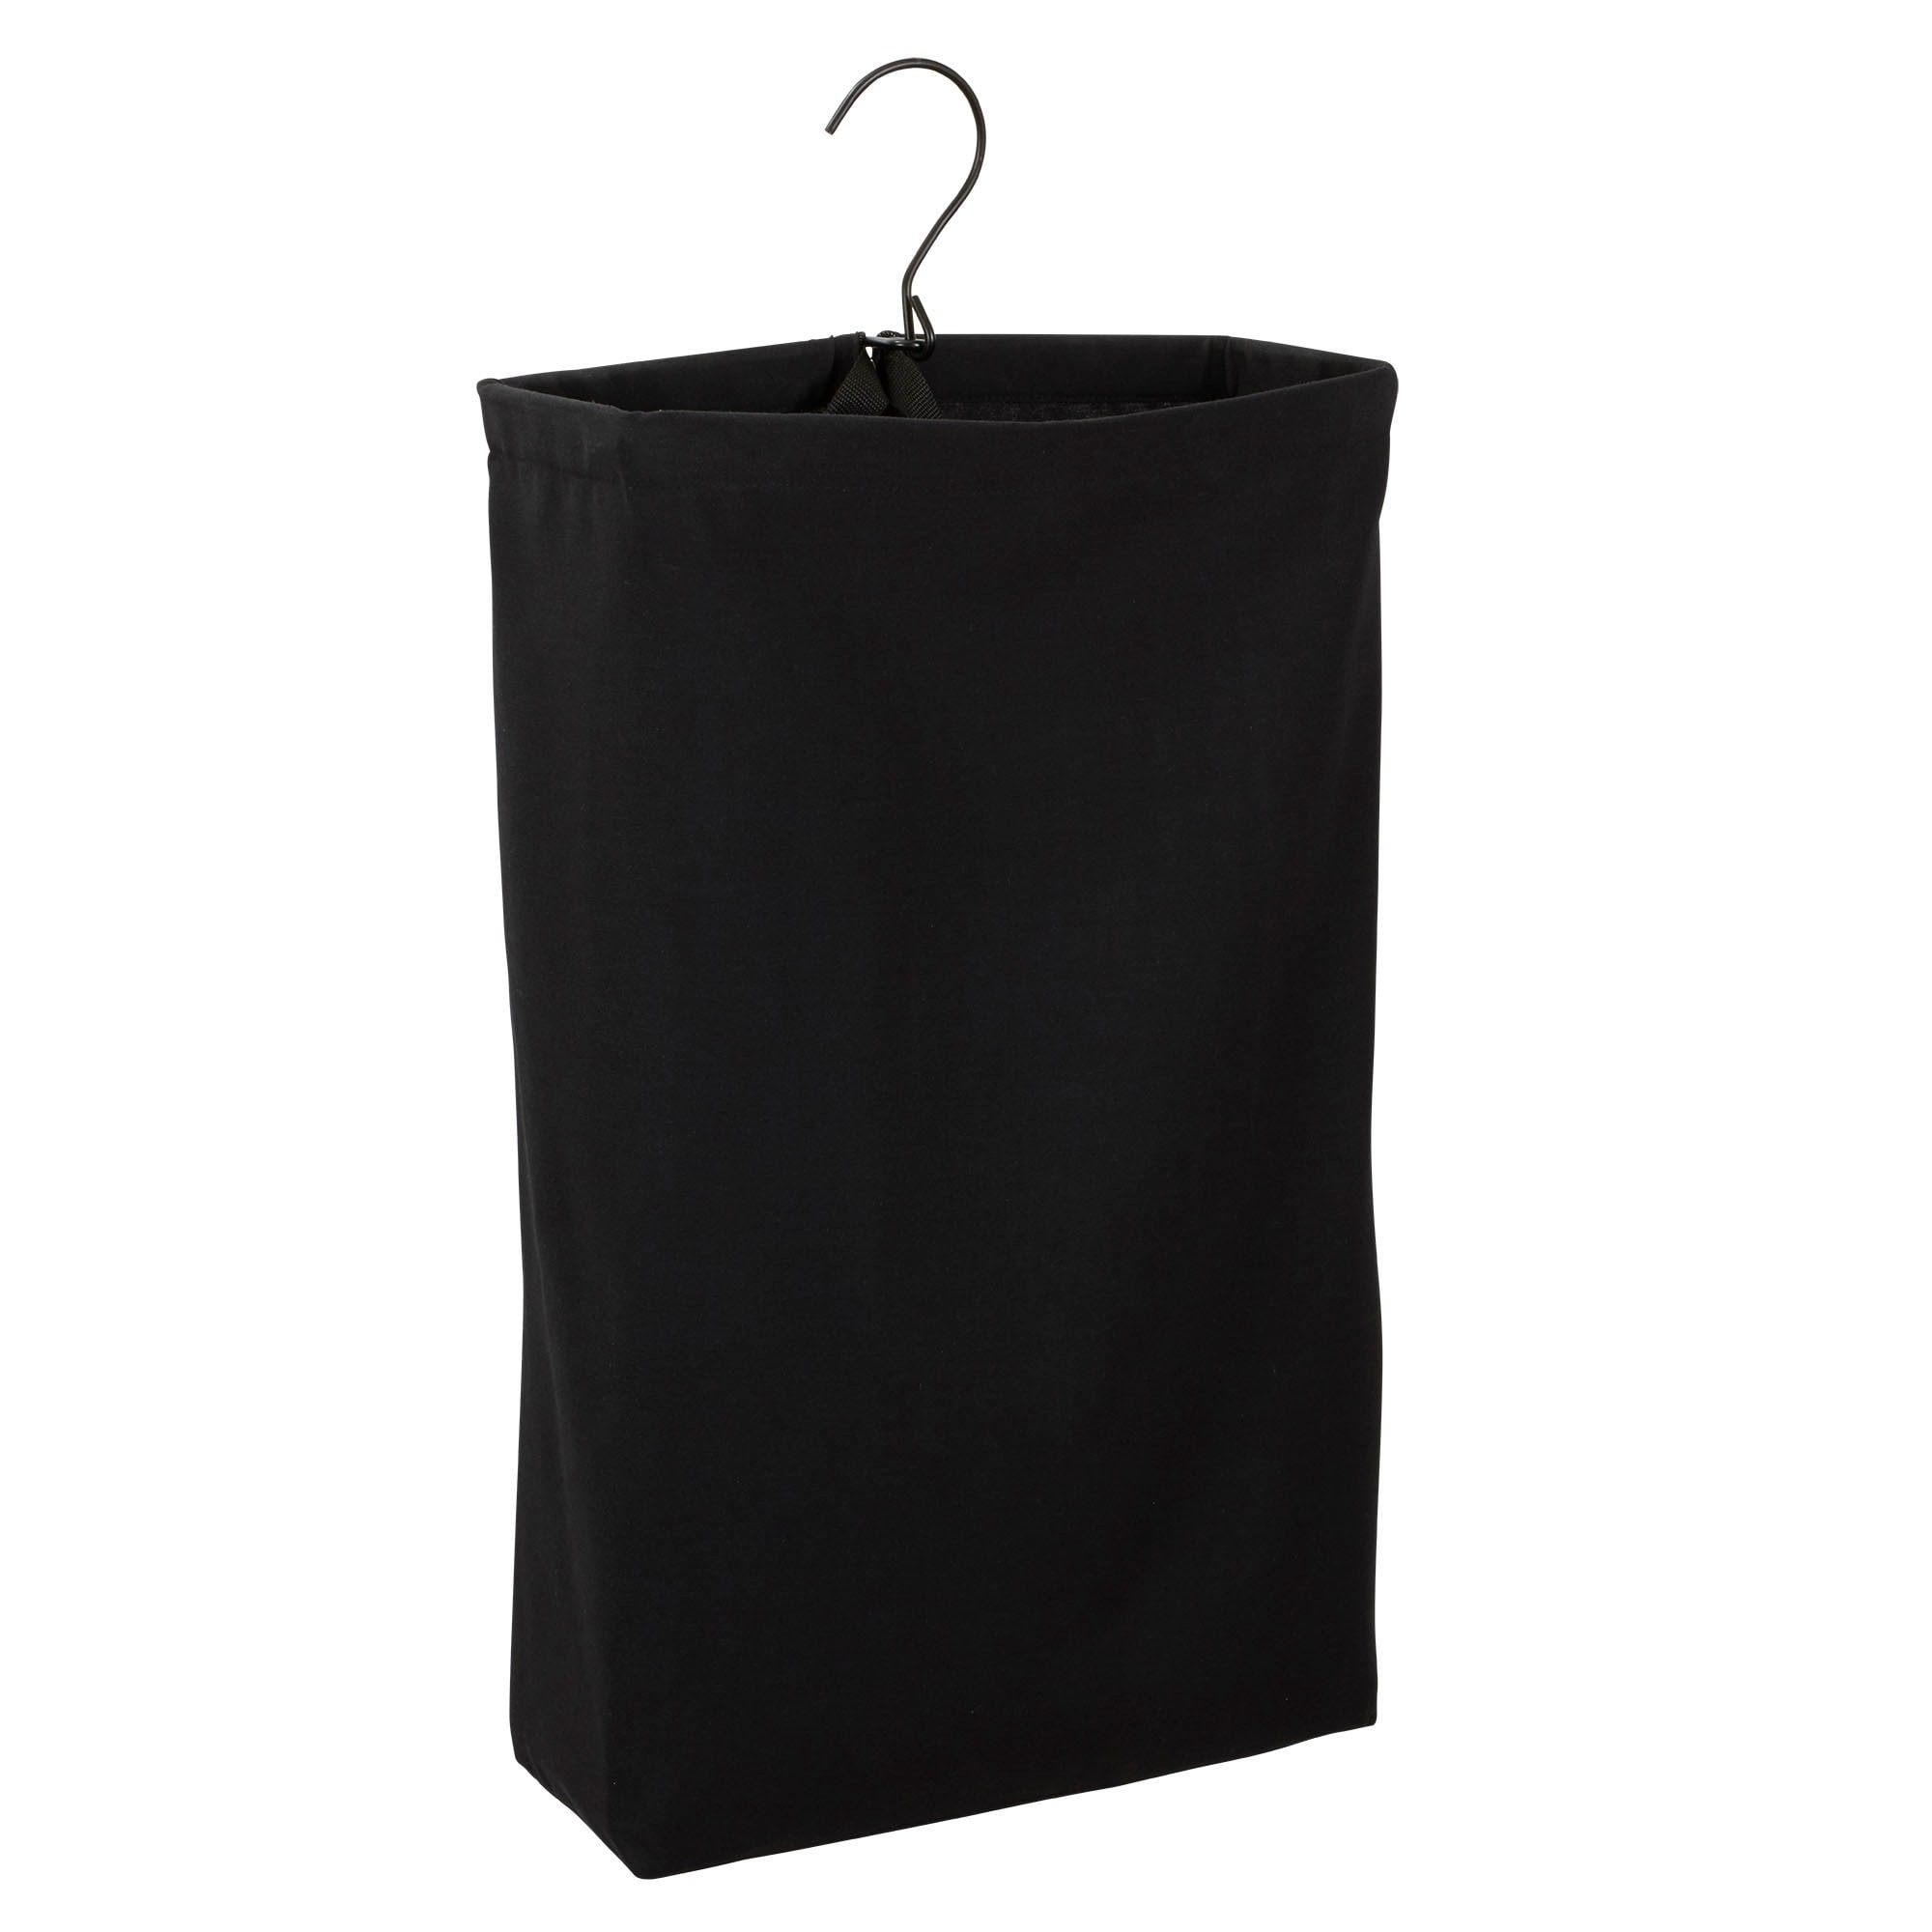 DIY laundry bag for delicates (Make your own lingerie wash bag) - Sew Guide